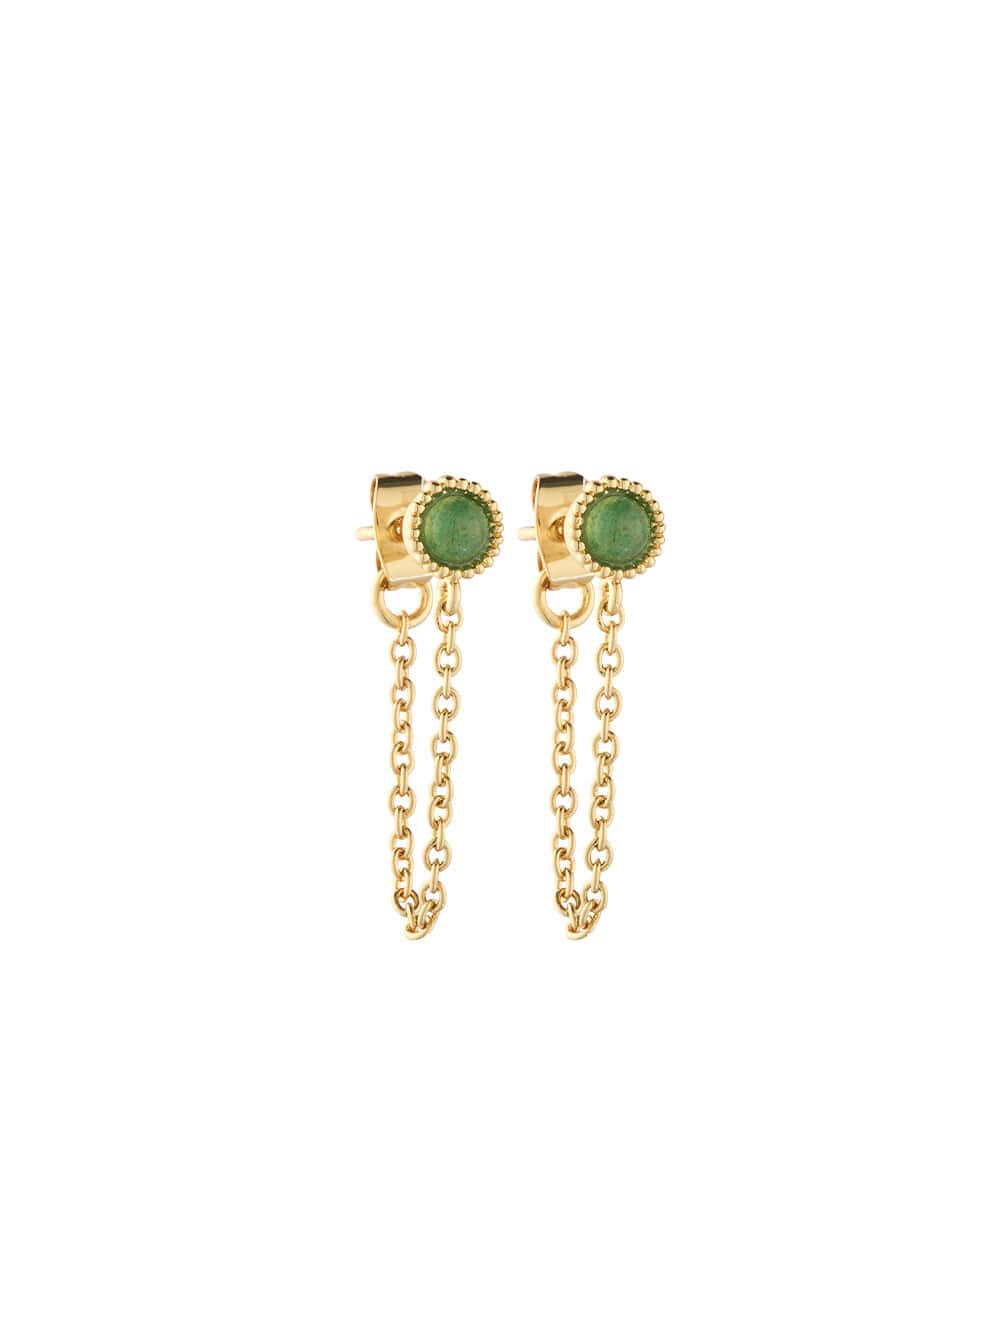 Neptune Chain Earrings KIVARI | Gold stud earrings with green stone and drop chain